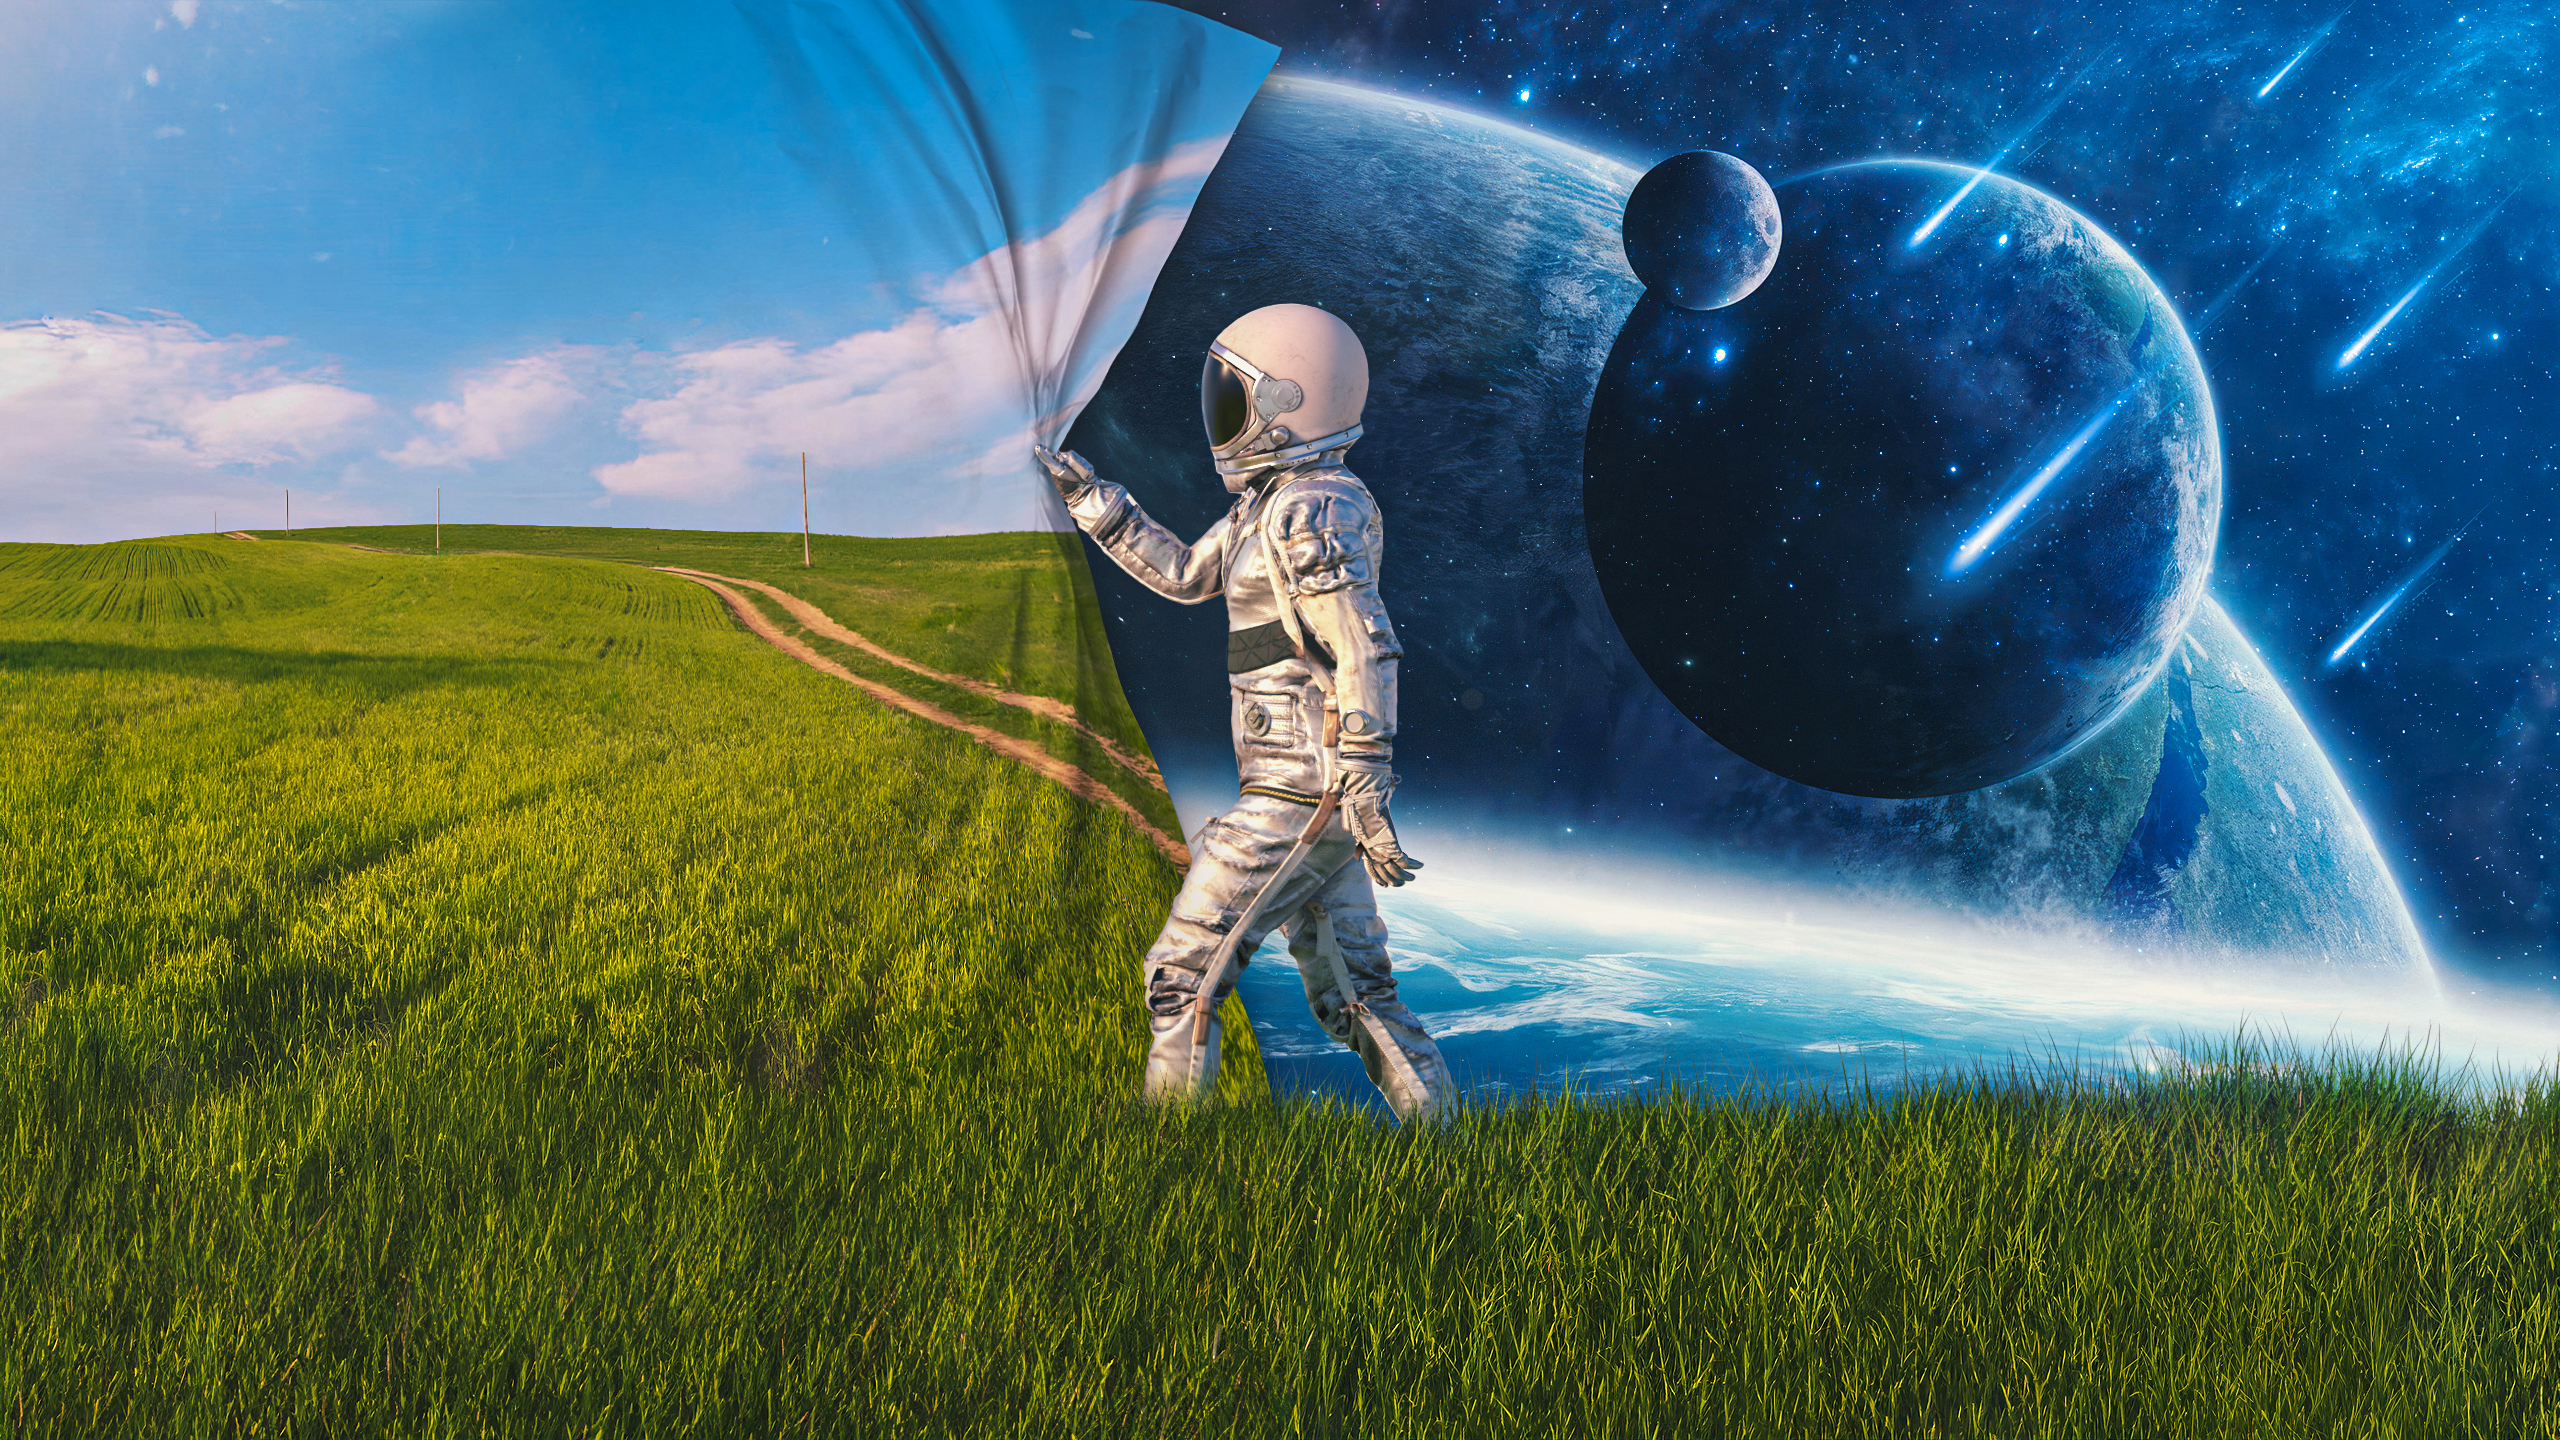 Digital Art Artwork Astronaut Helmet Spacesuit Curtains Field Grass Planet Humor Dirt Road Landscape 2560x1440